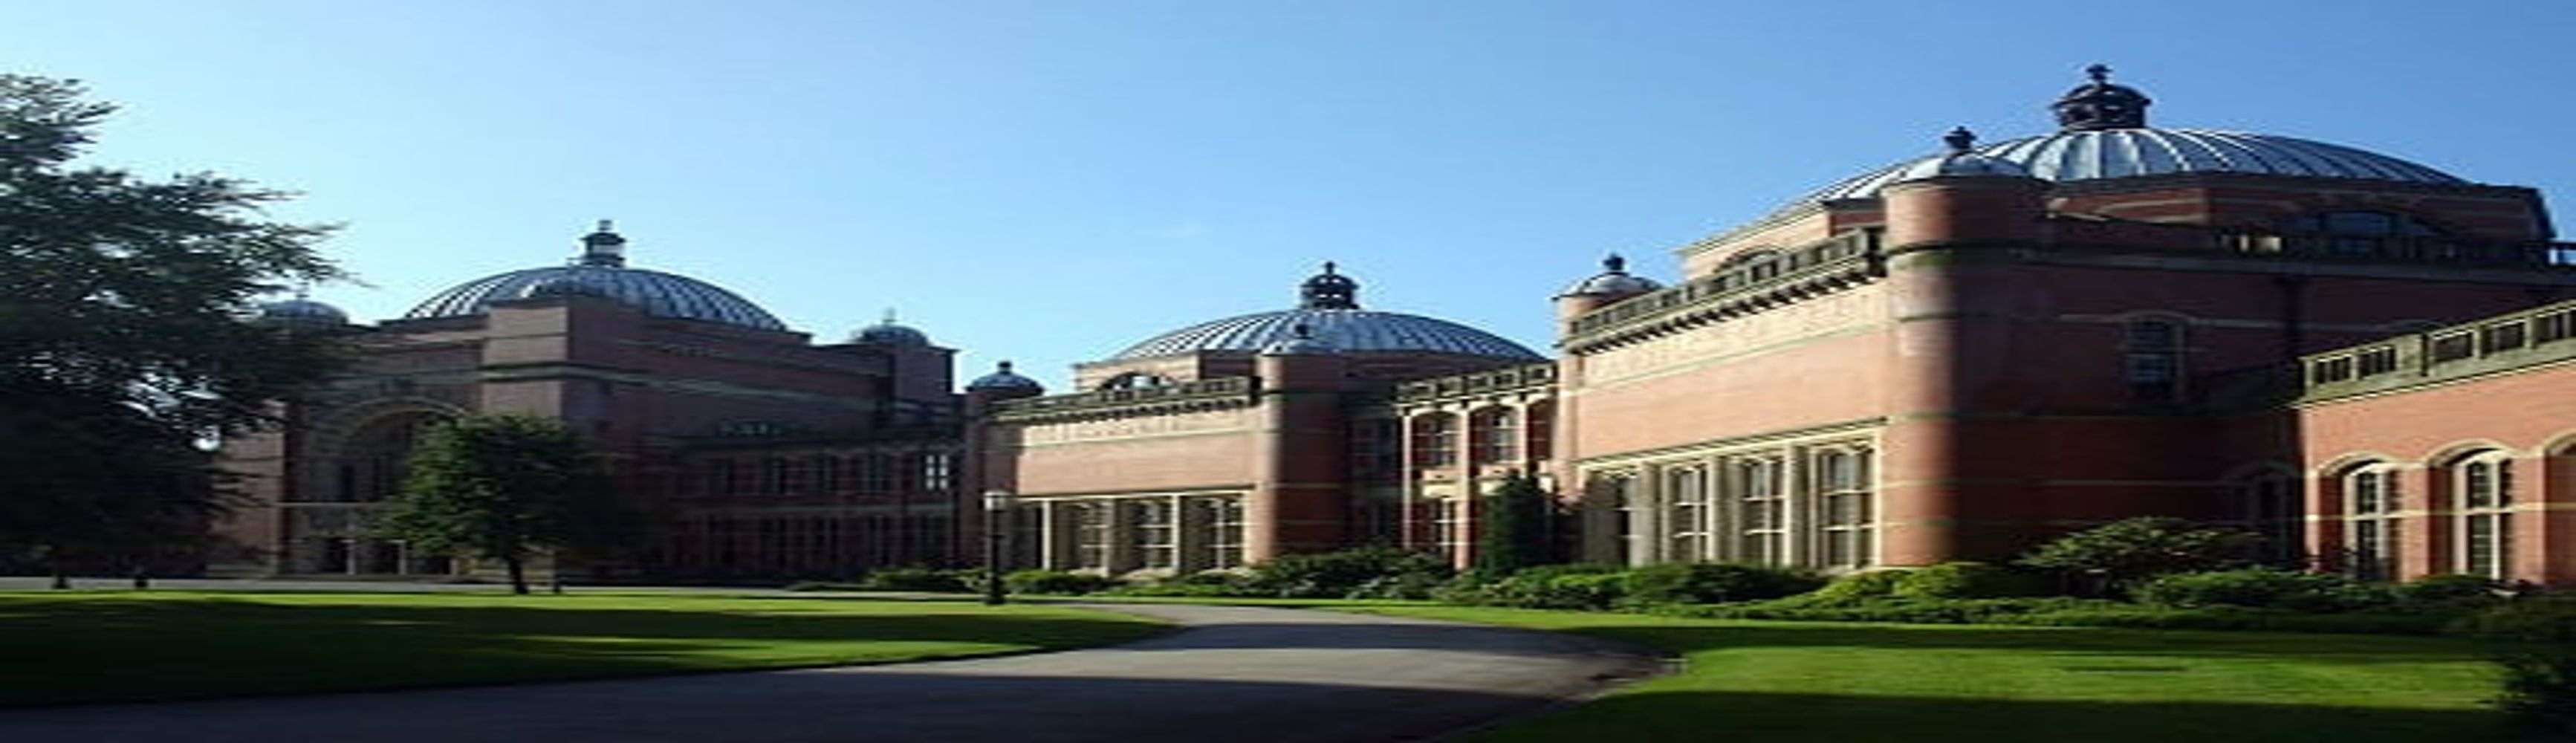 University college of Birmingham